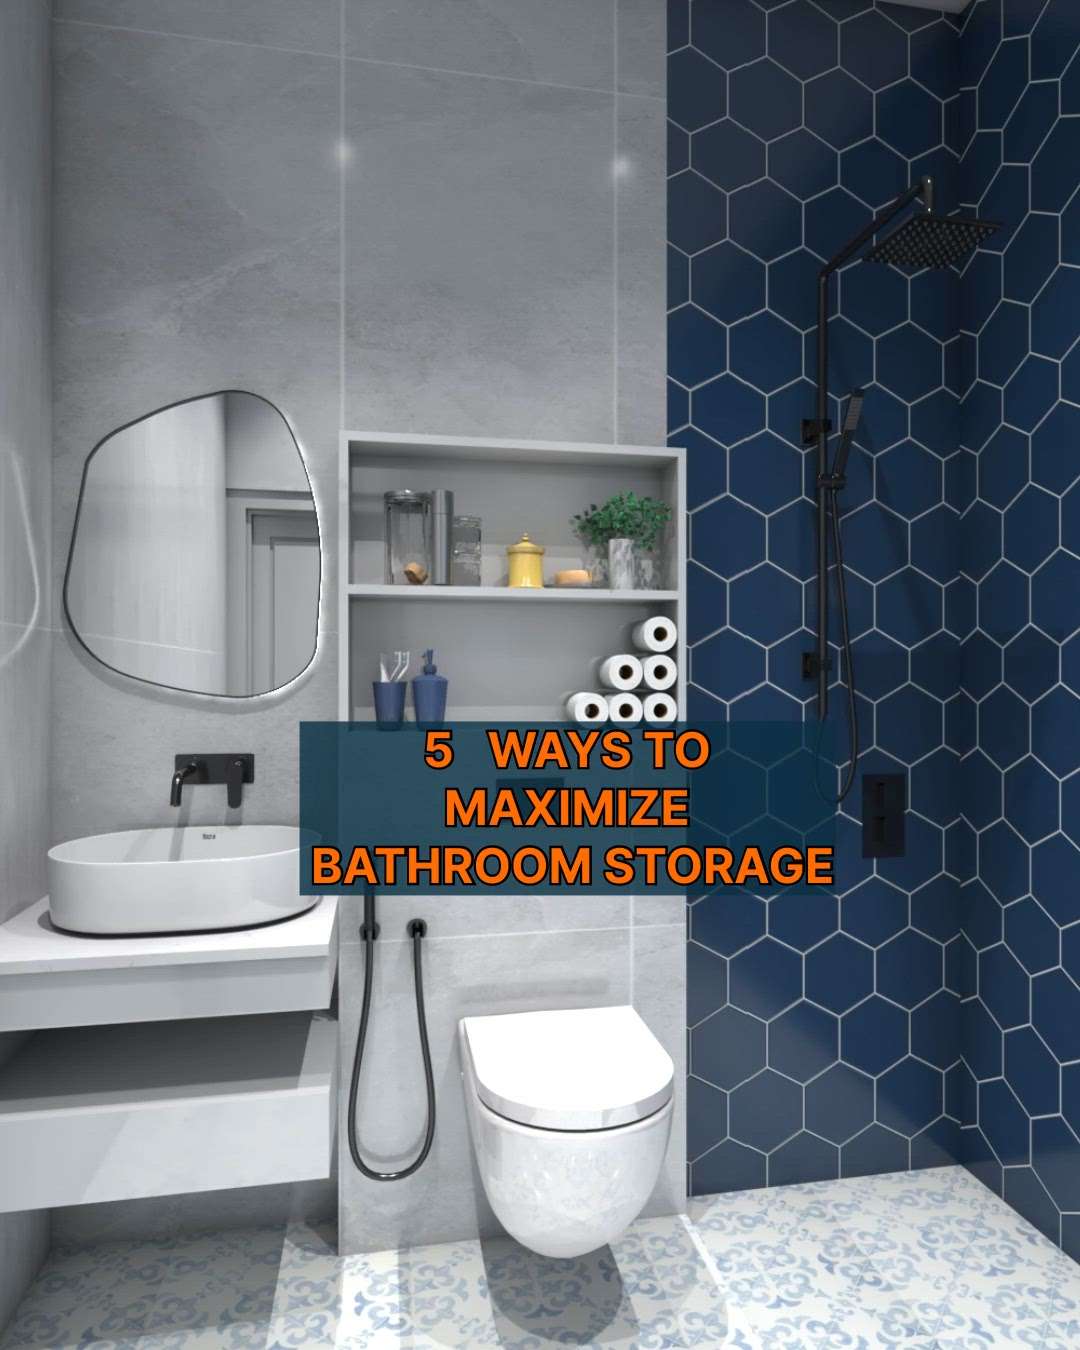 5 ways to Maximize your bathroom storage space

#storage #maximum #maximumspace #bathroom #BathroomStorage #nichedesign #niches #niche #washvanity #washerman #ledge